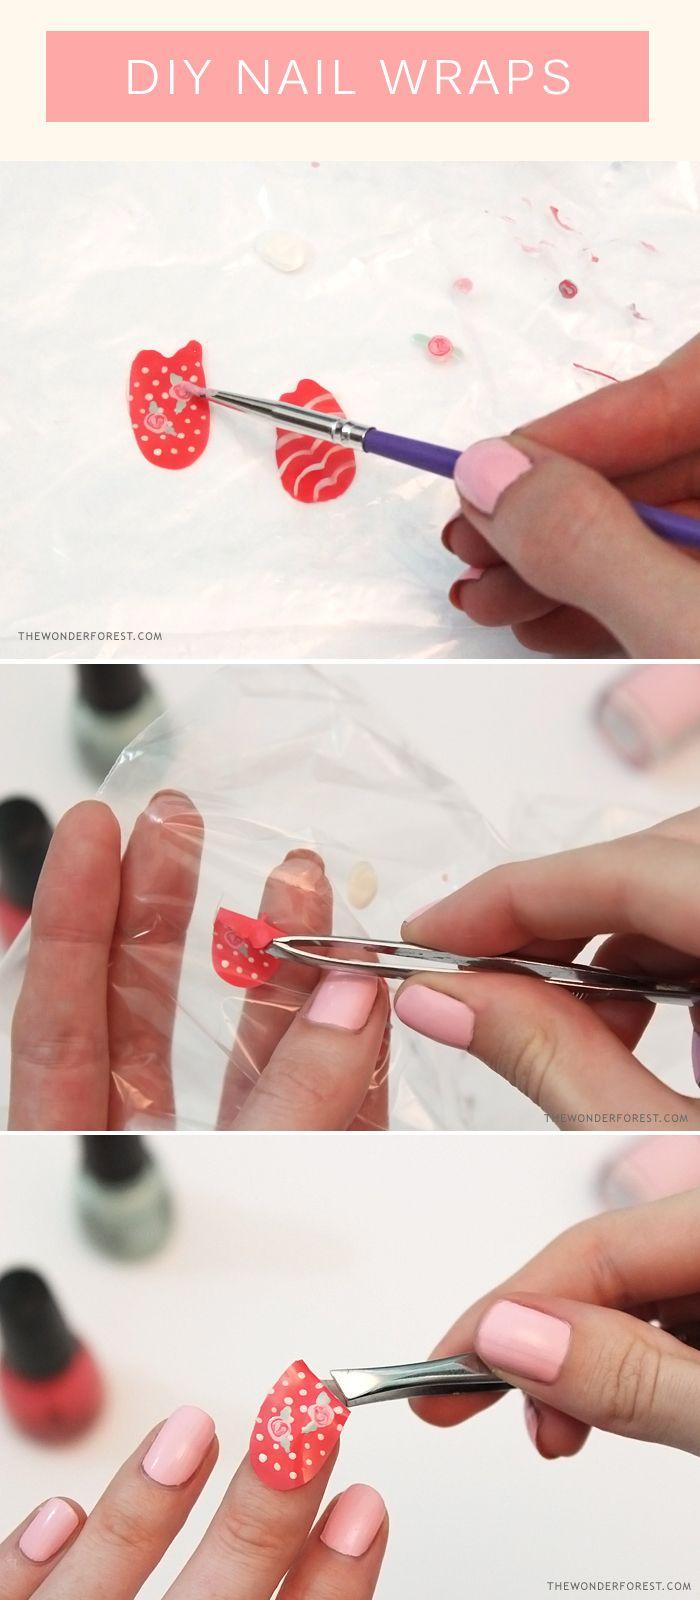 Hochzeit - Make Your Own Nail Wraps!